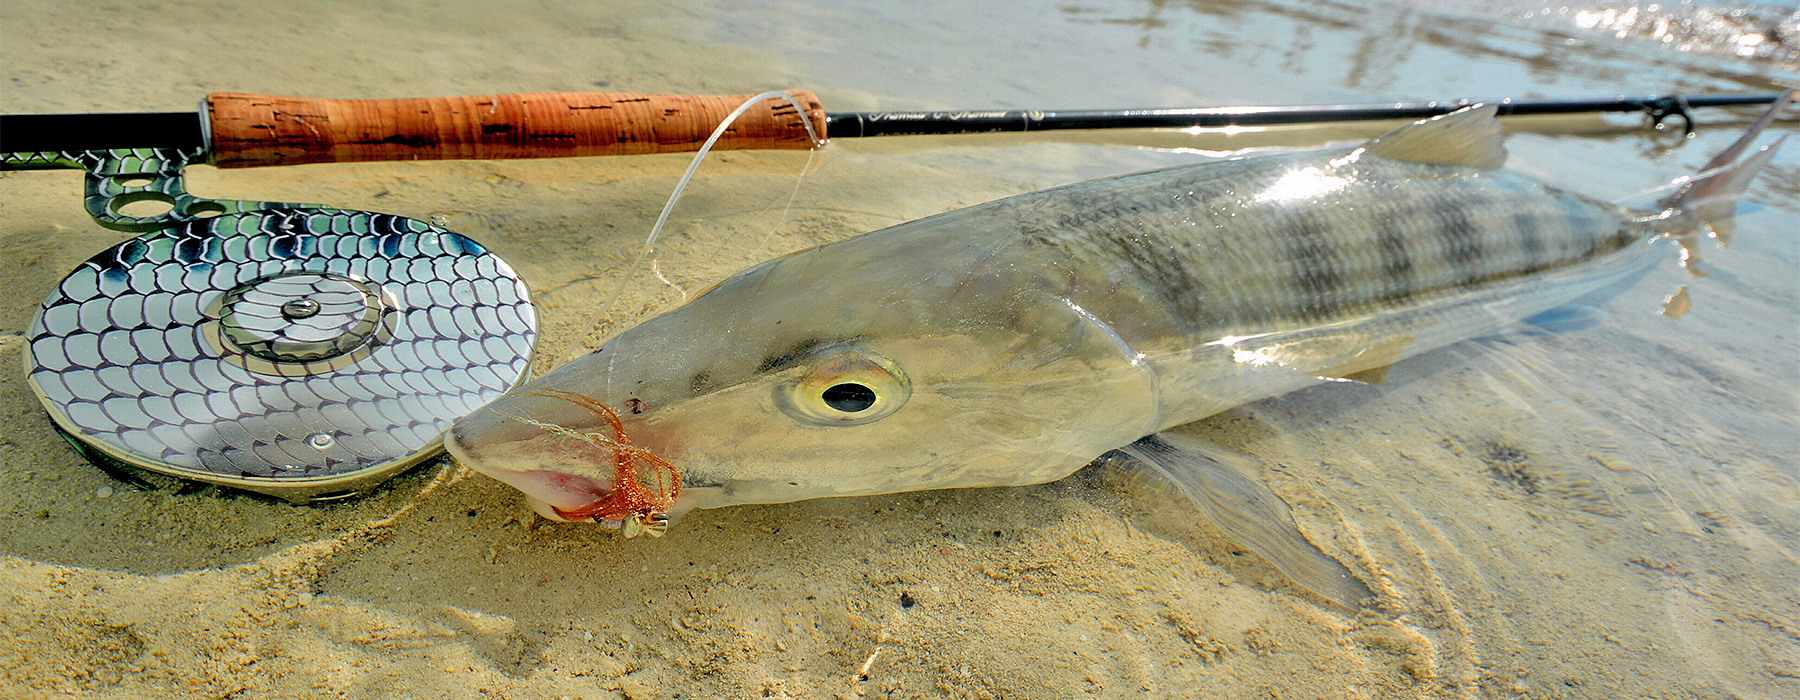 Bahamas bonefish